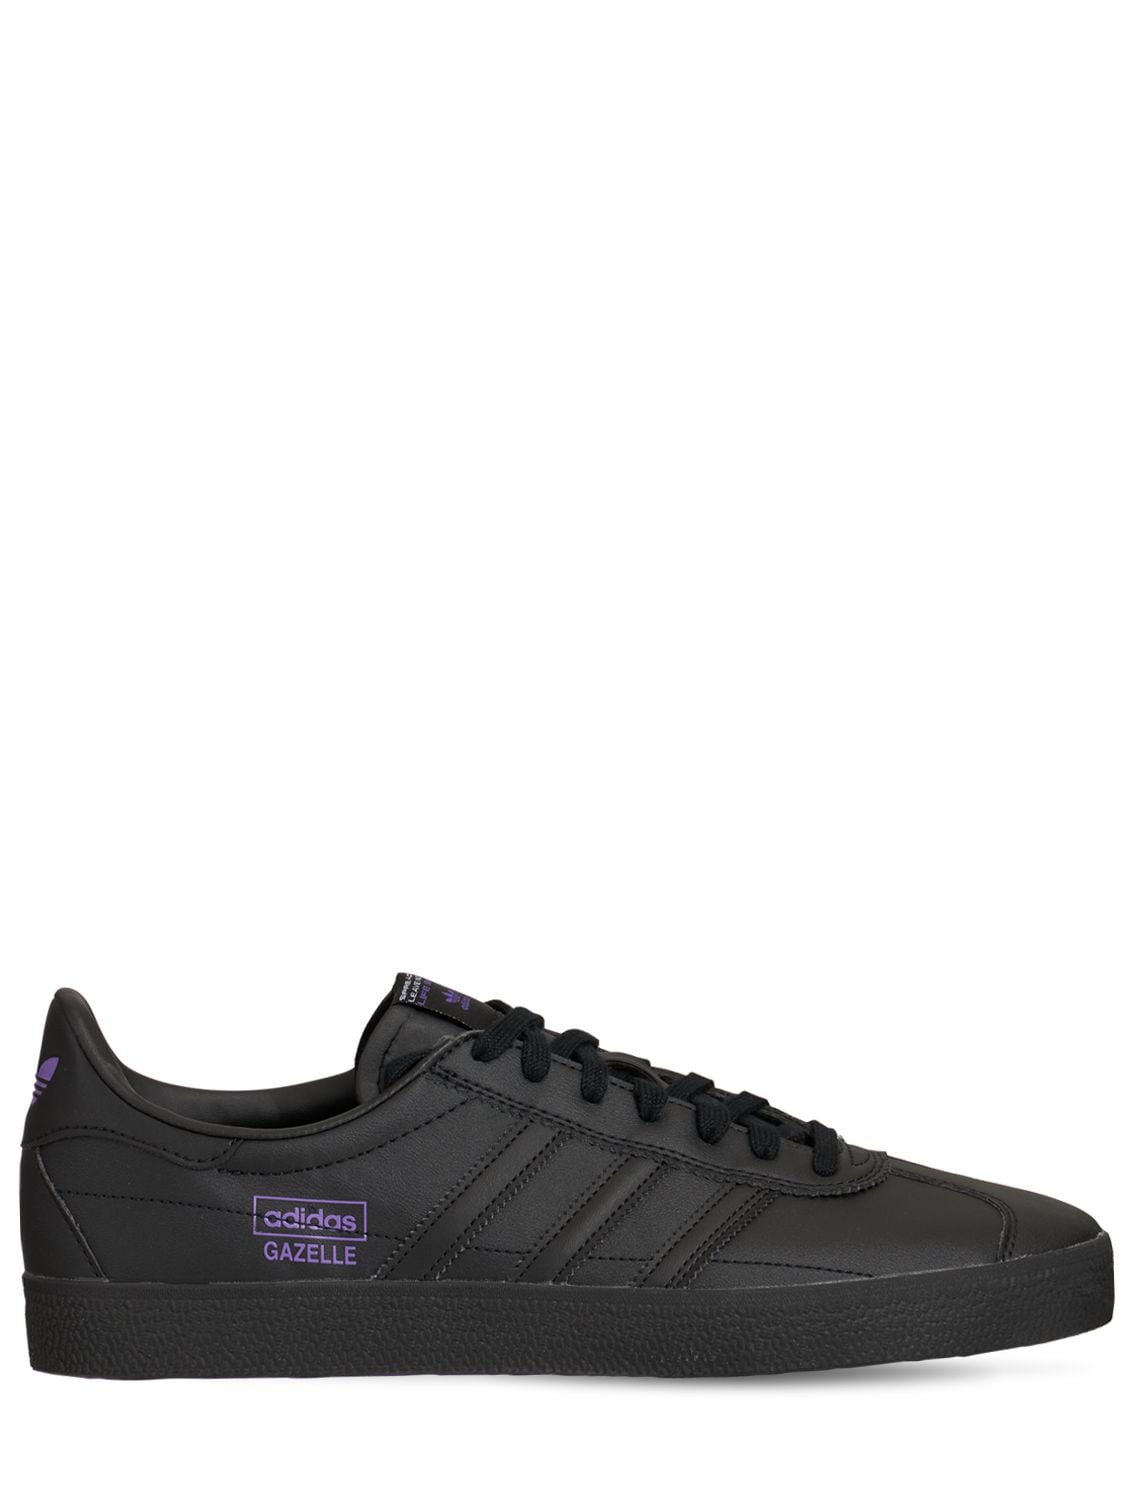 Adidas Originals Paradigm Gazelle Adv Sneakers In Black